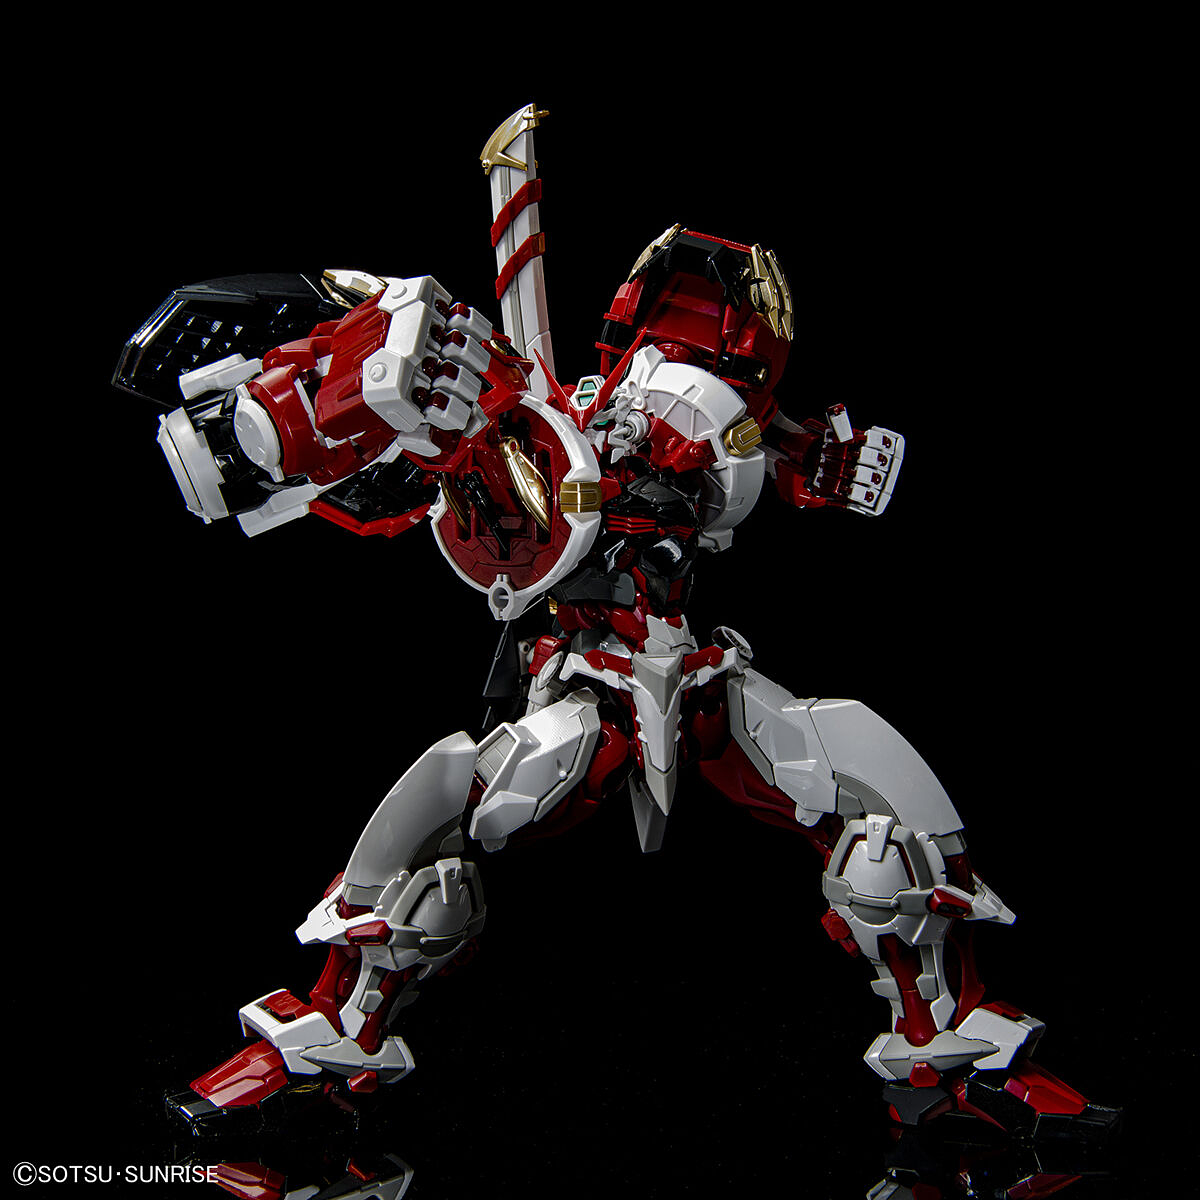 Bandai MG 1/100 Gundam Astray Red Frame Custom Model Kit – Gunpla